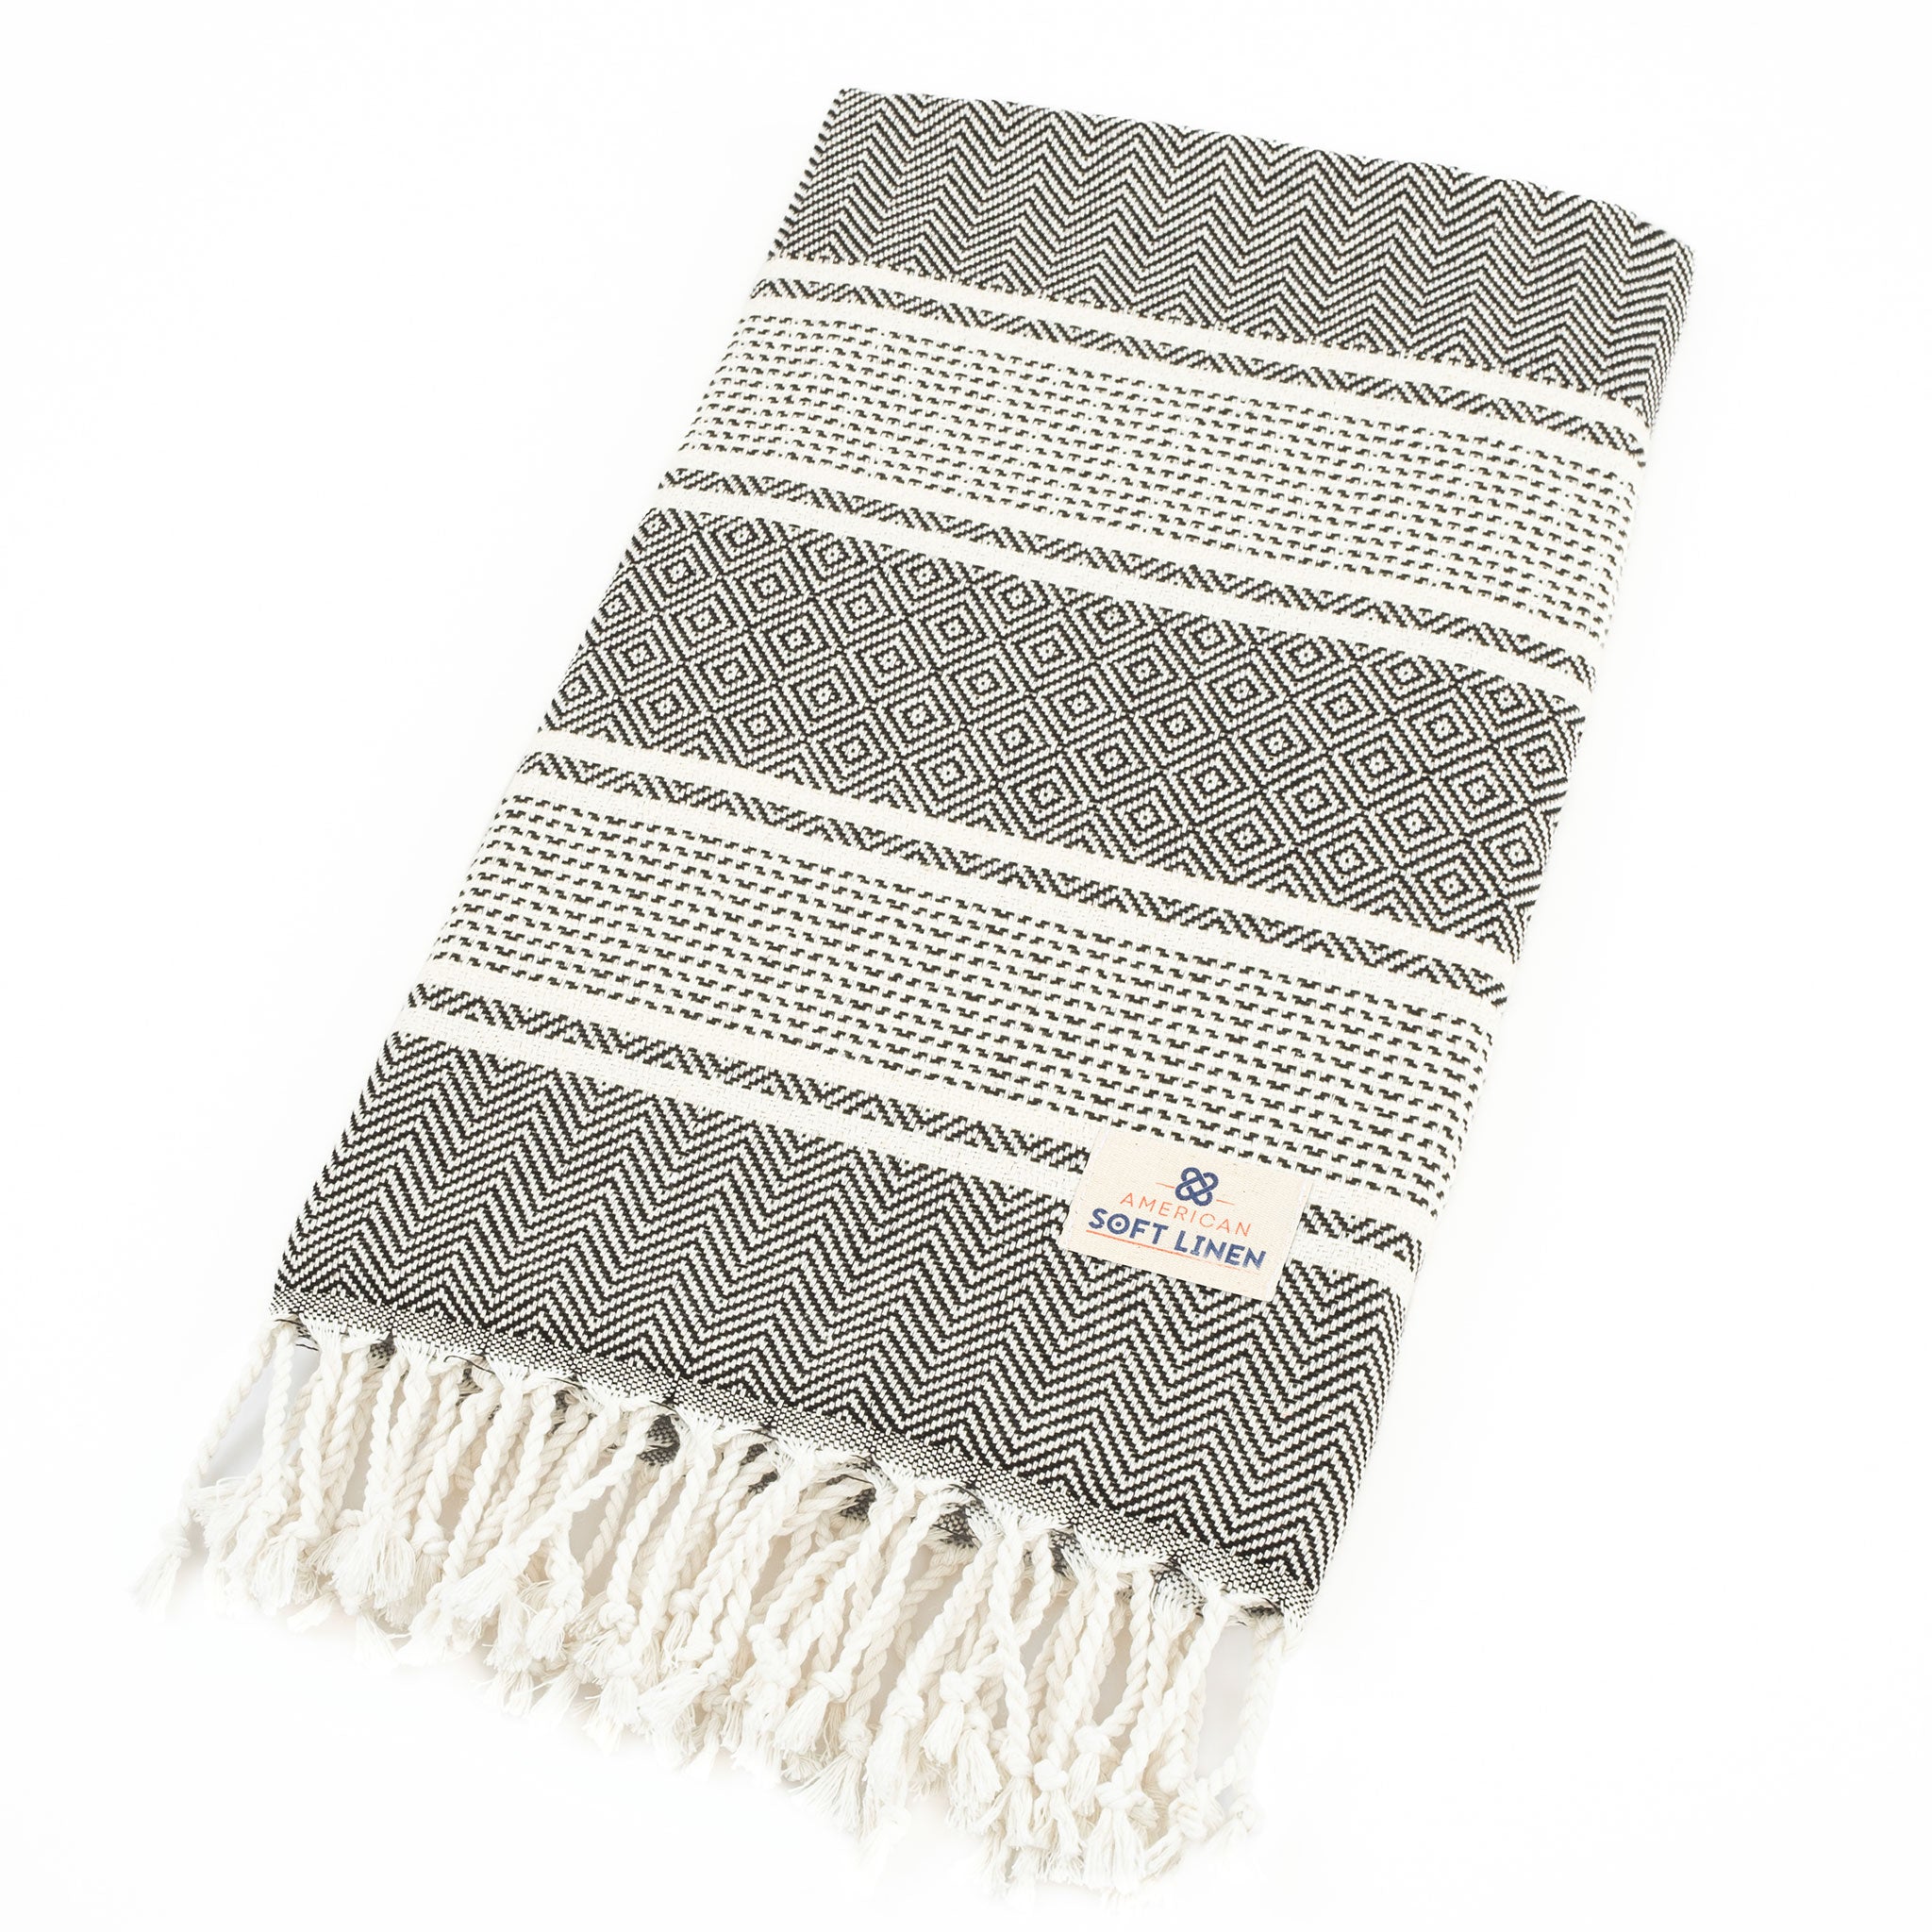 American Soft Linen - 100% Cotton Turkish Peshtemal Towels 40x70 Inches - Black-Striped - 5